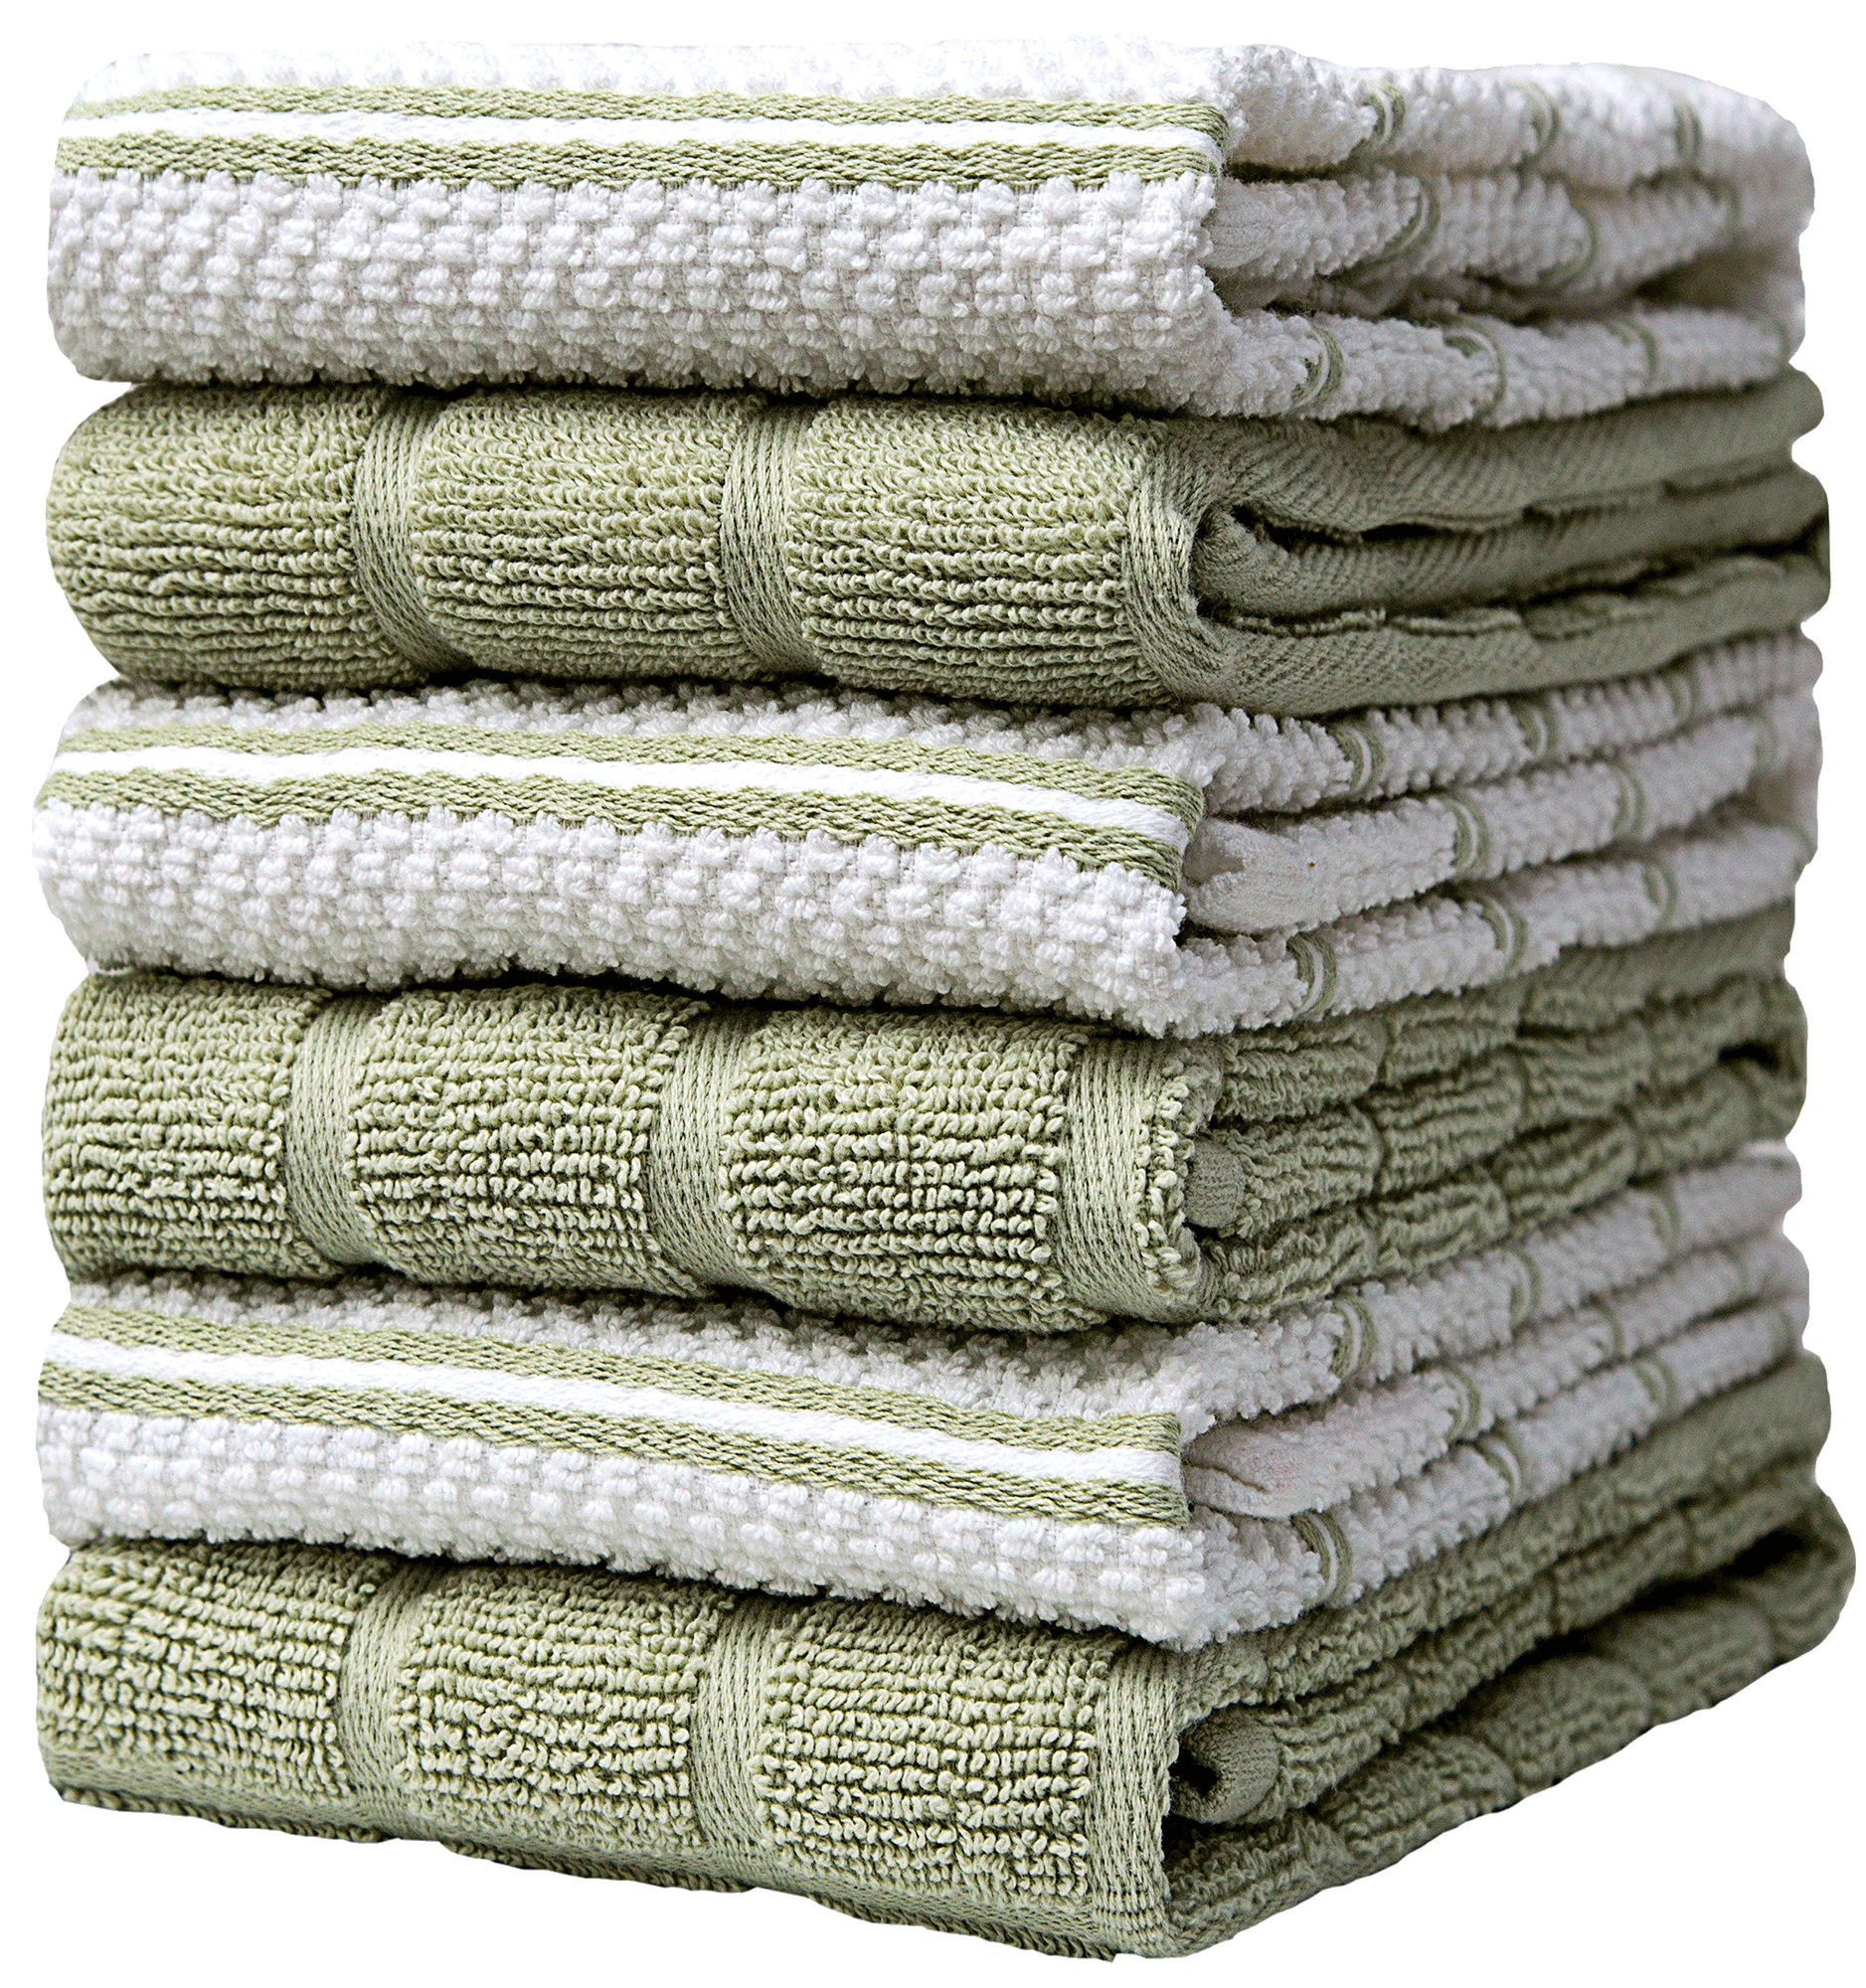 Popcorn Grid Kitchen Towel Set- Buy Now at Bumble Towels!